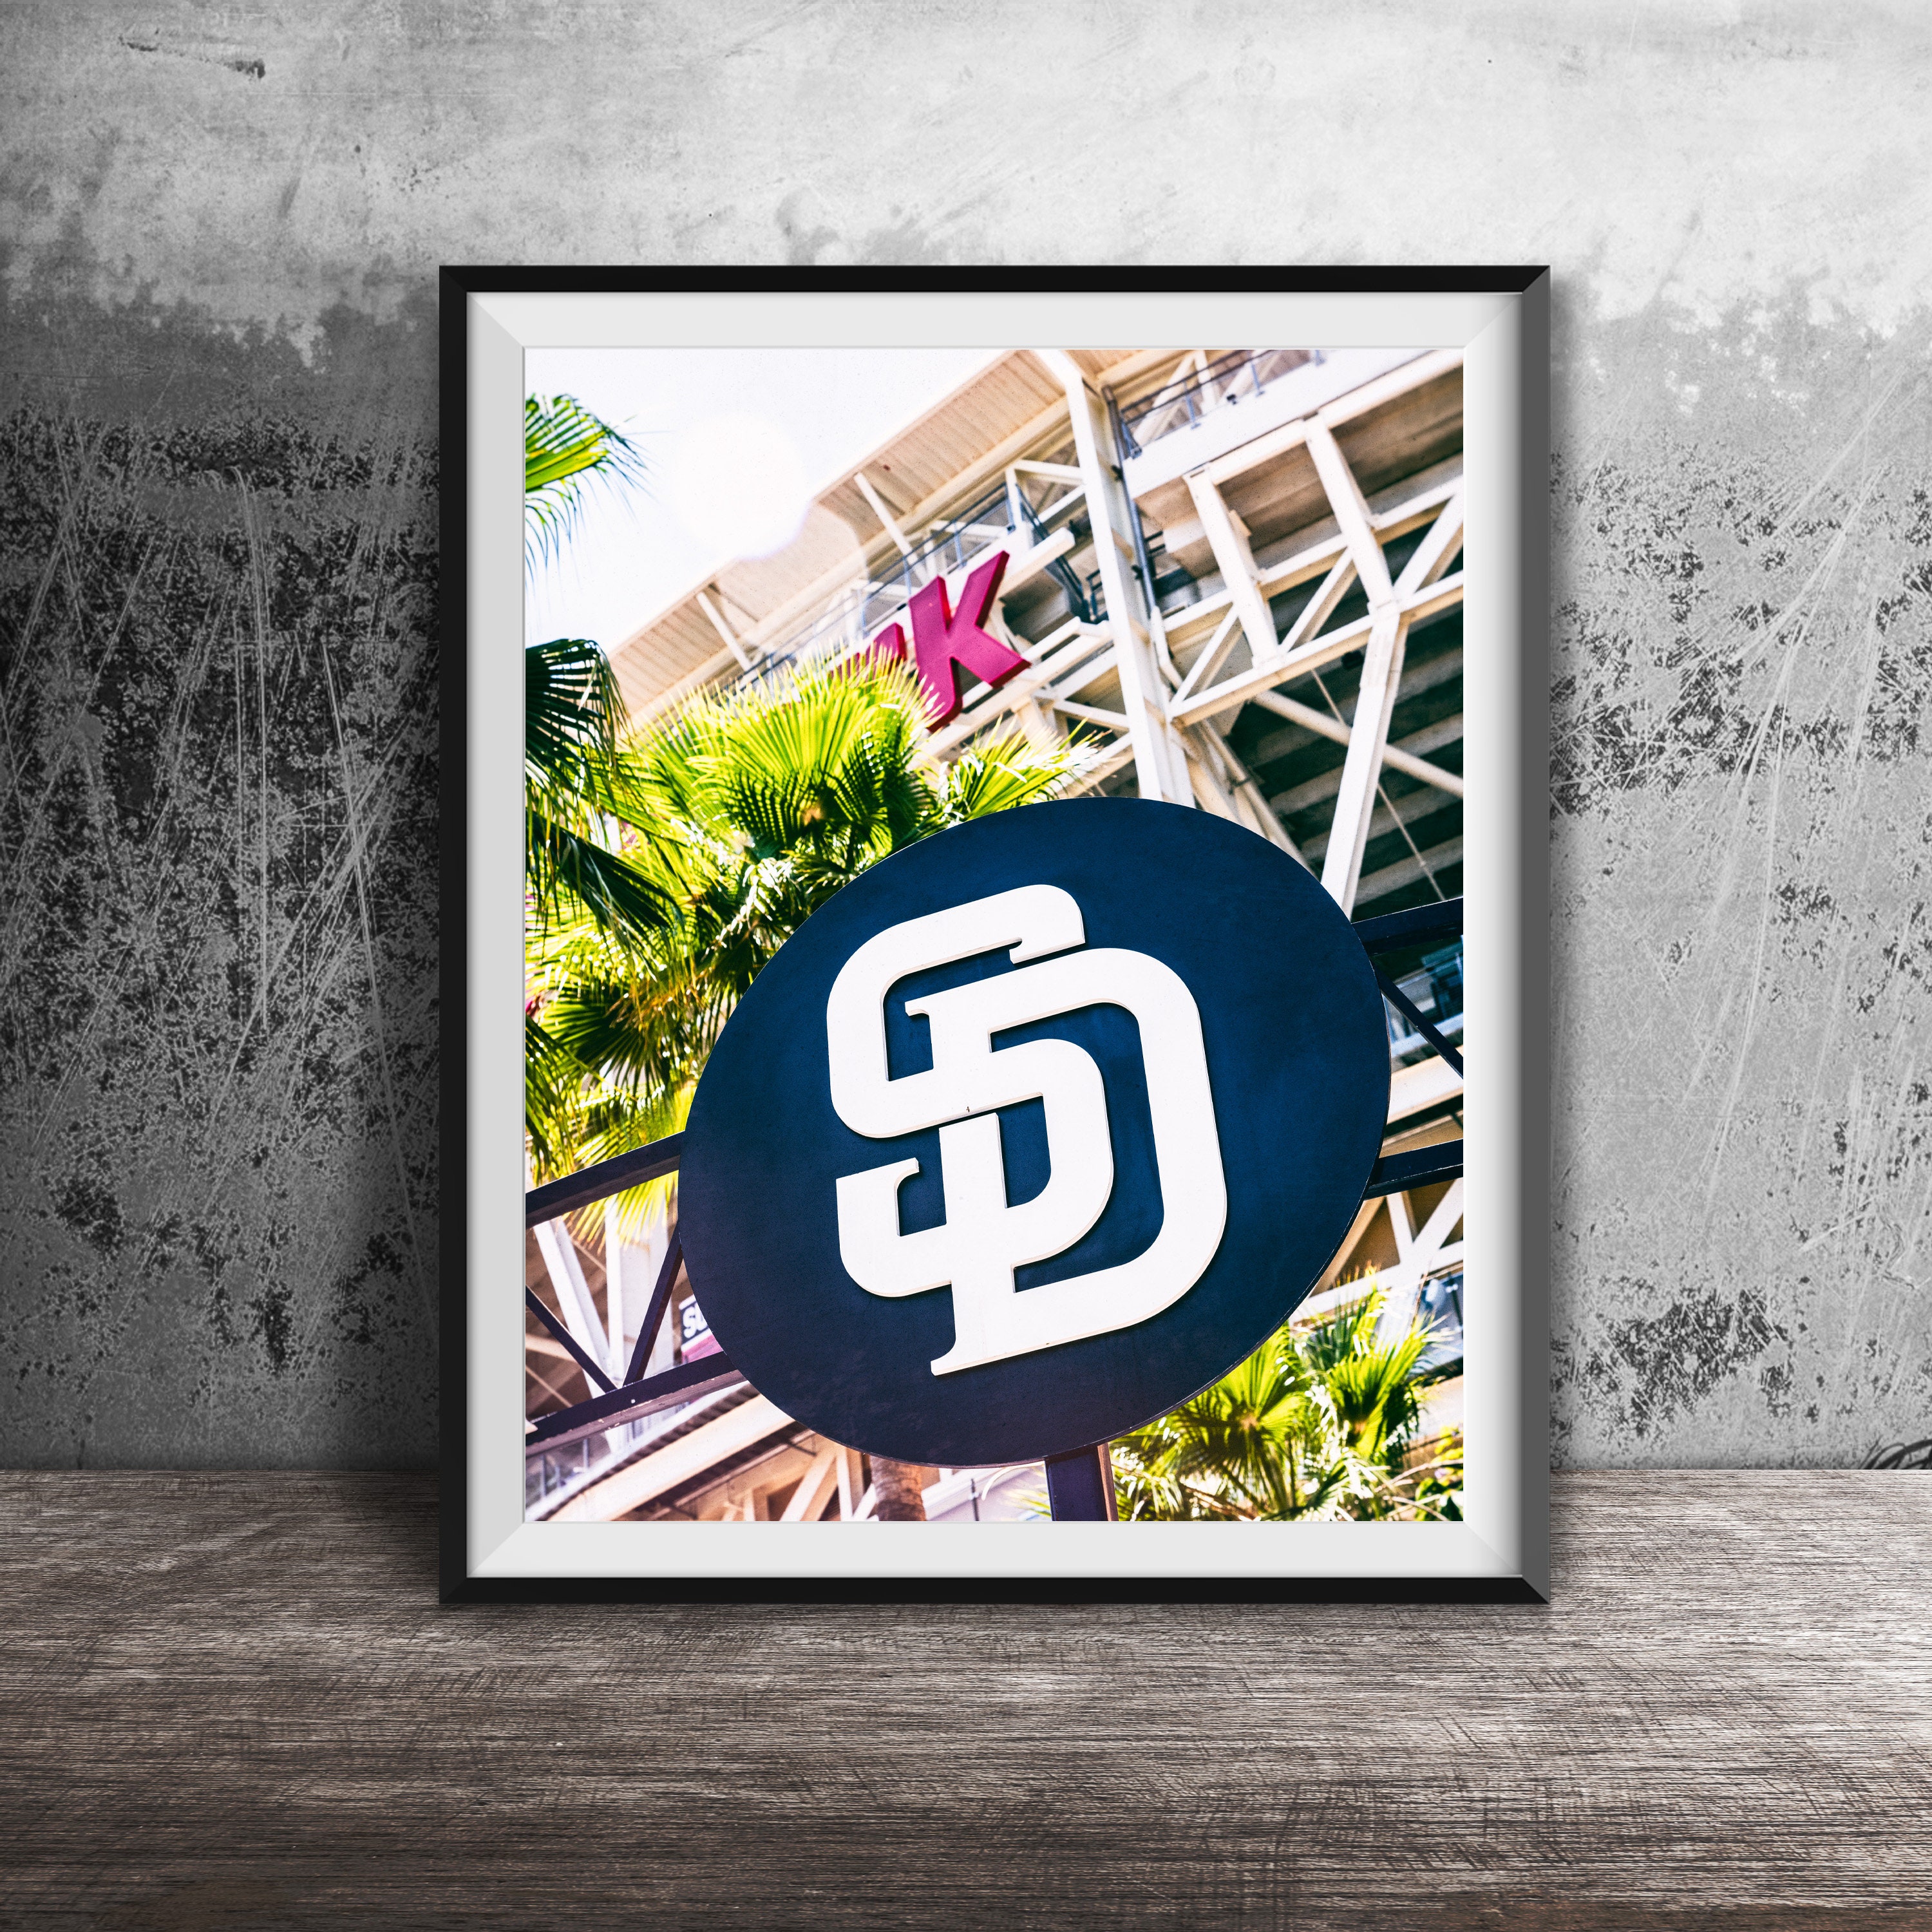 San Diego Padres Art Print San Diego Baseball Stadium Sign 